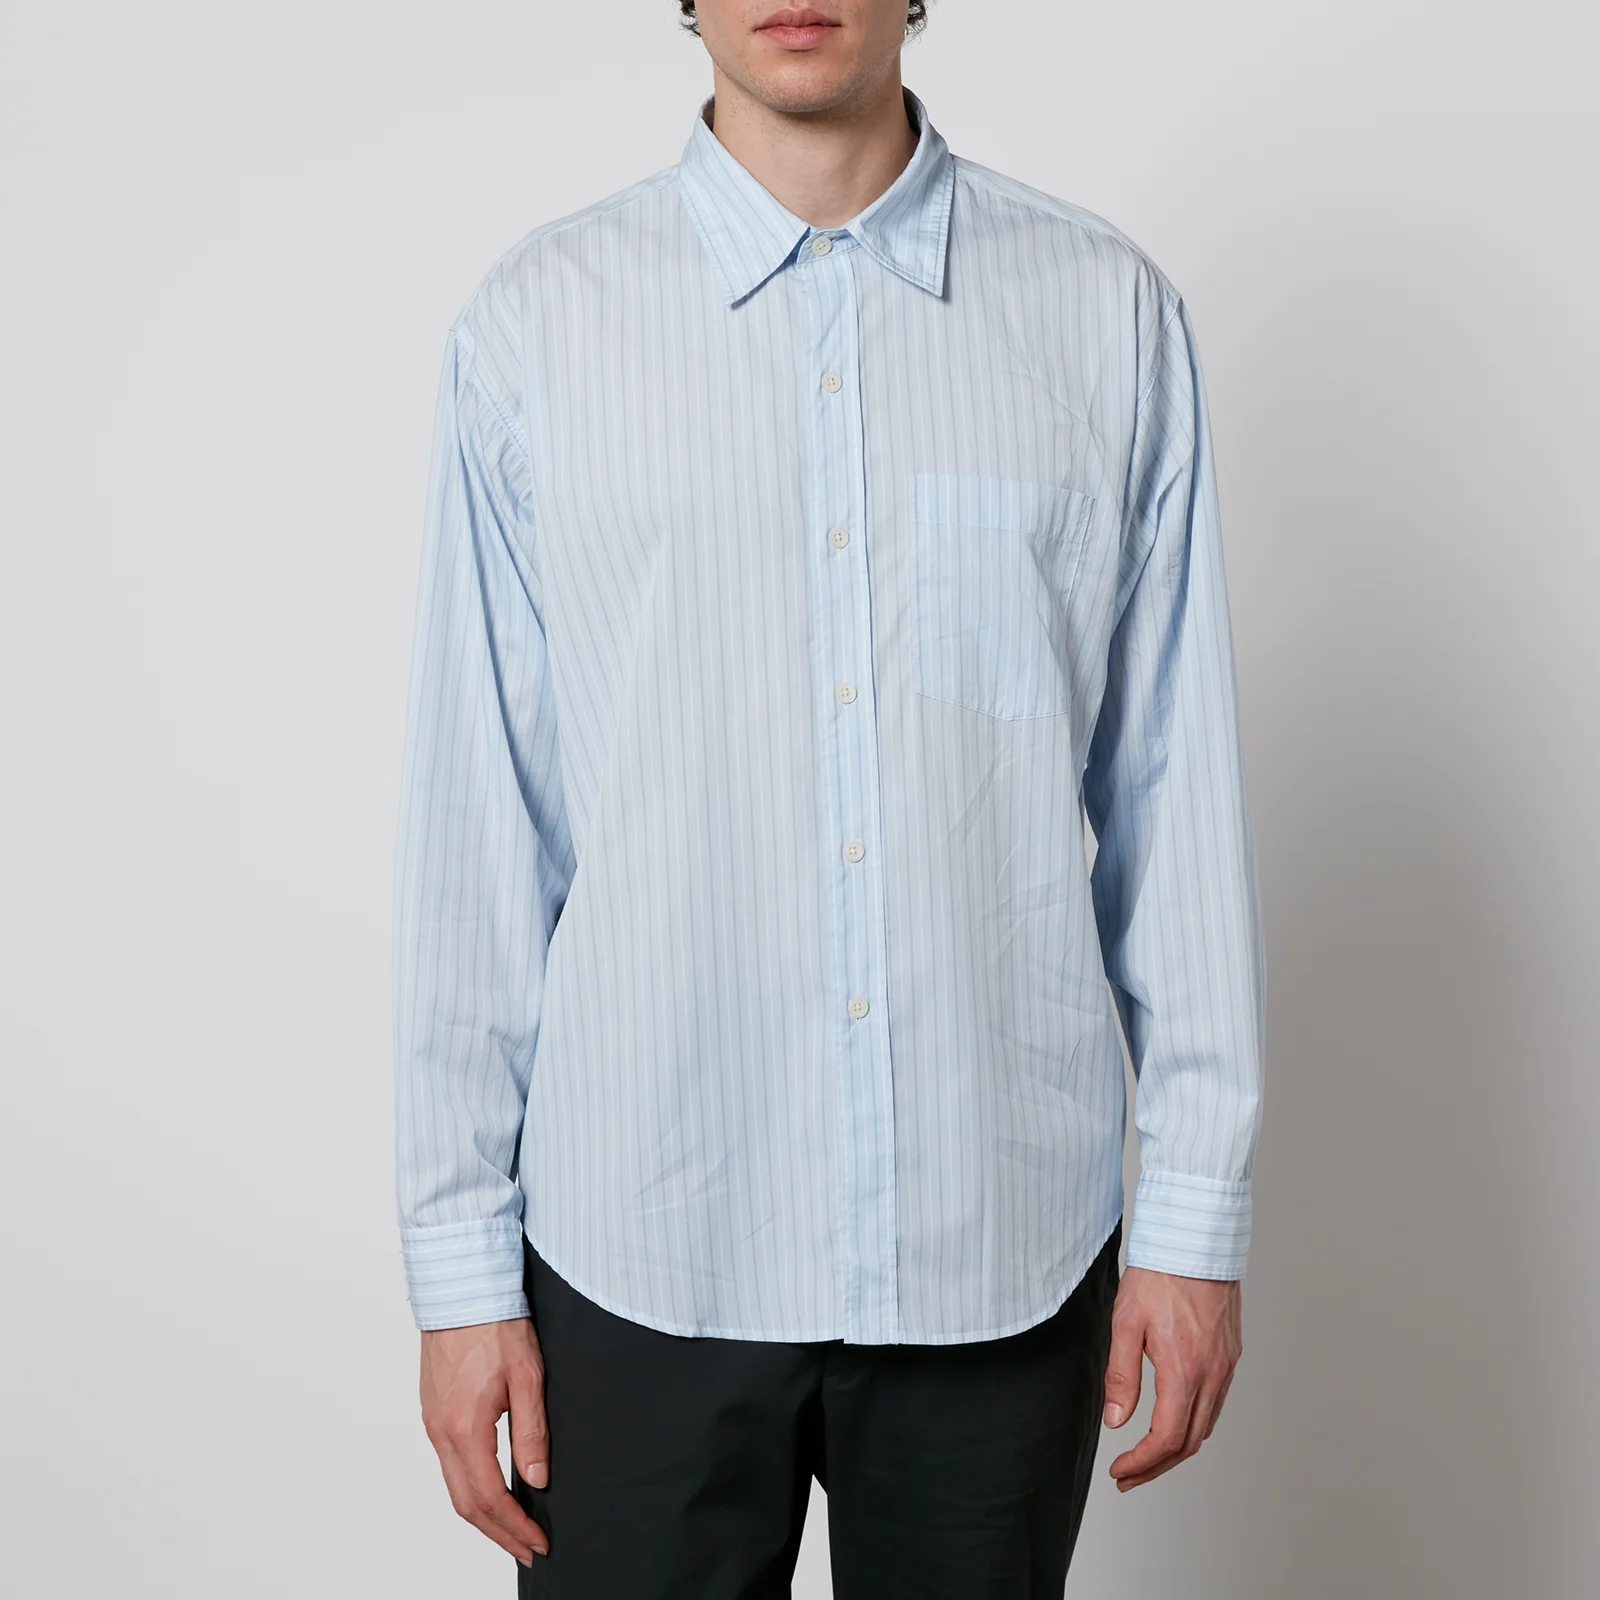 mfpen Executive Striped Cotton-Poplin Shirt - L Image 1